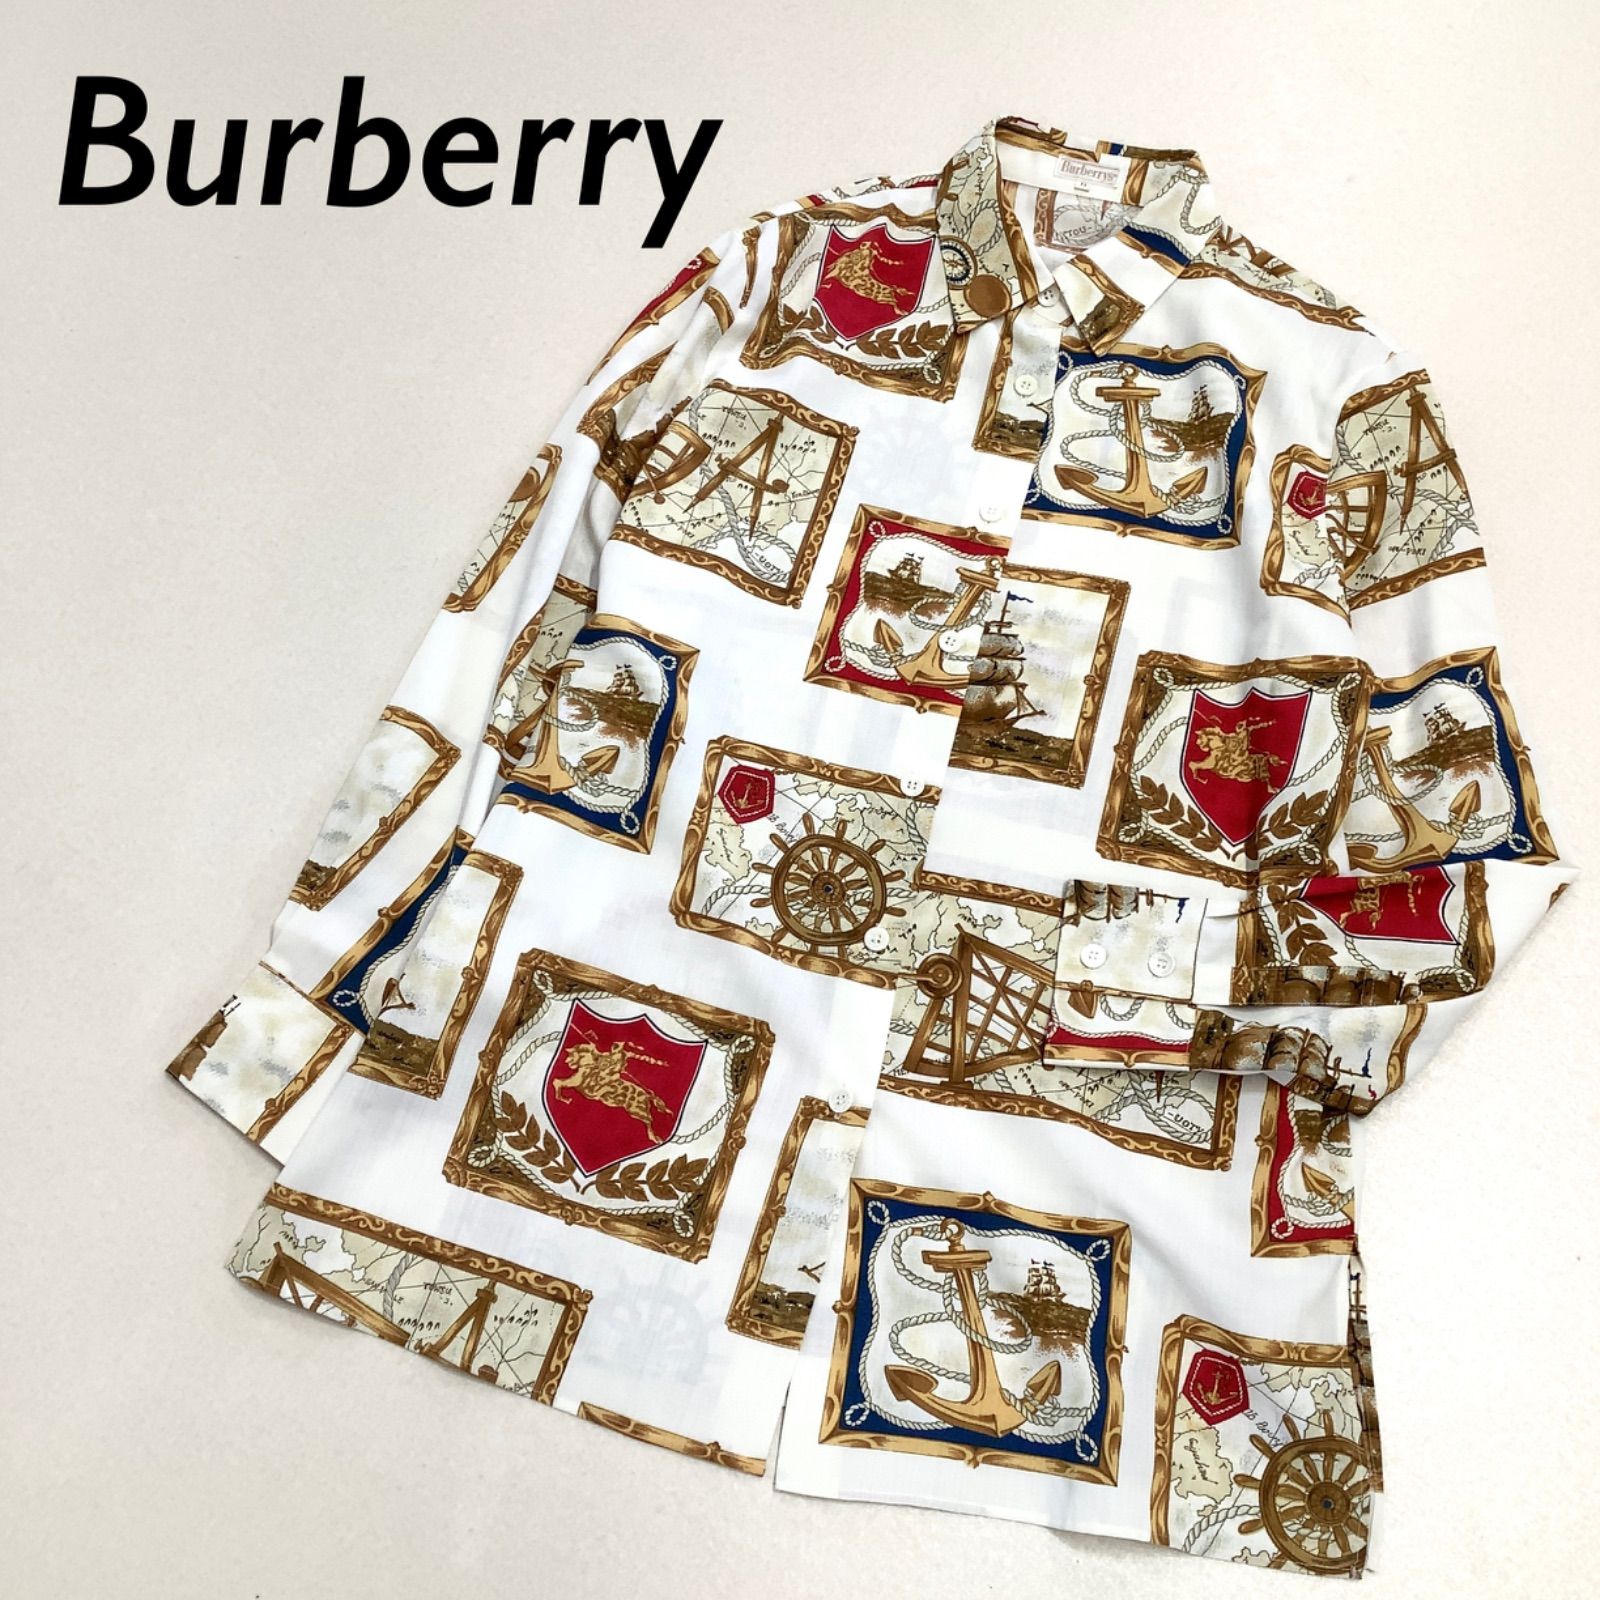 Burberry's バーバリー ヴィンテージ シャツ スカーフ柄 11 古着-